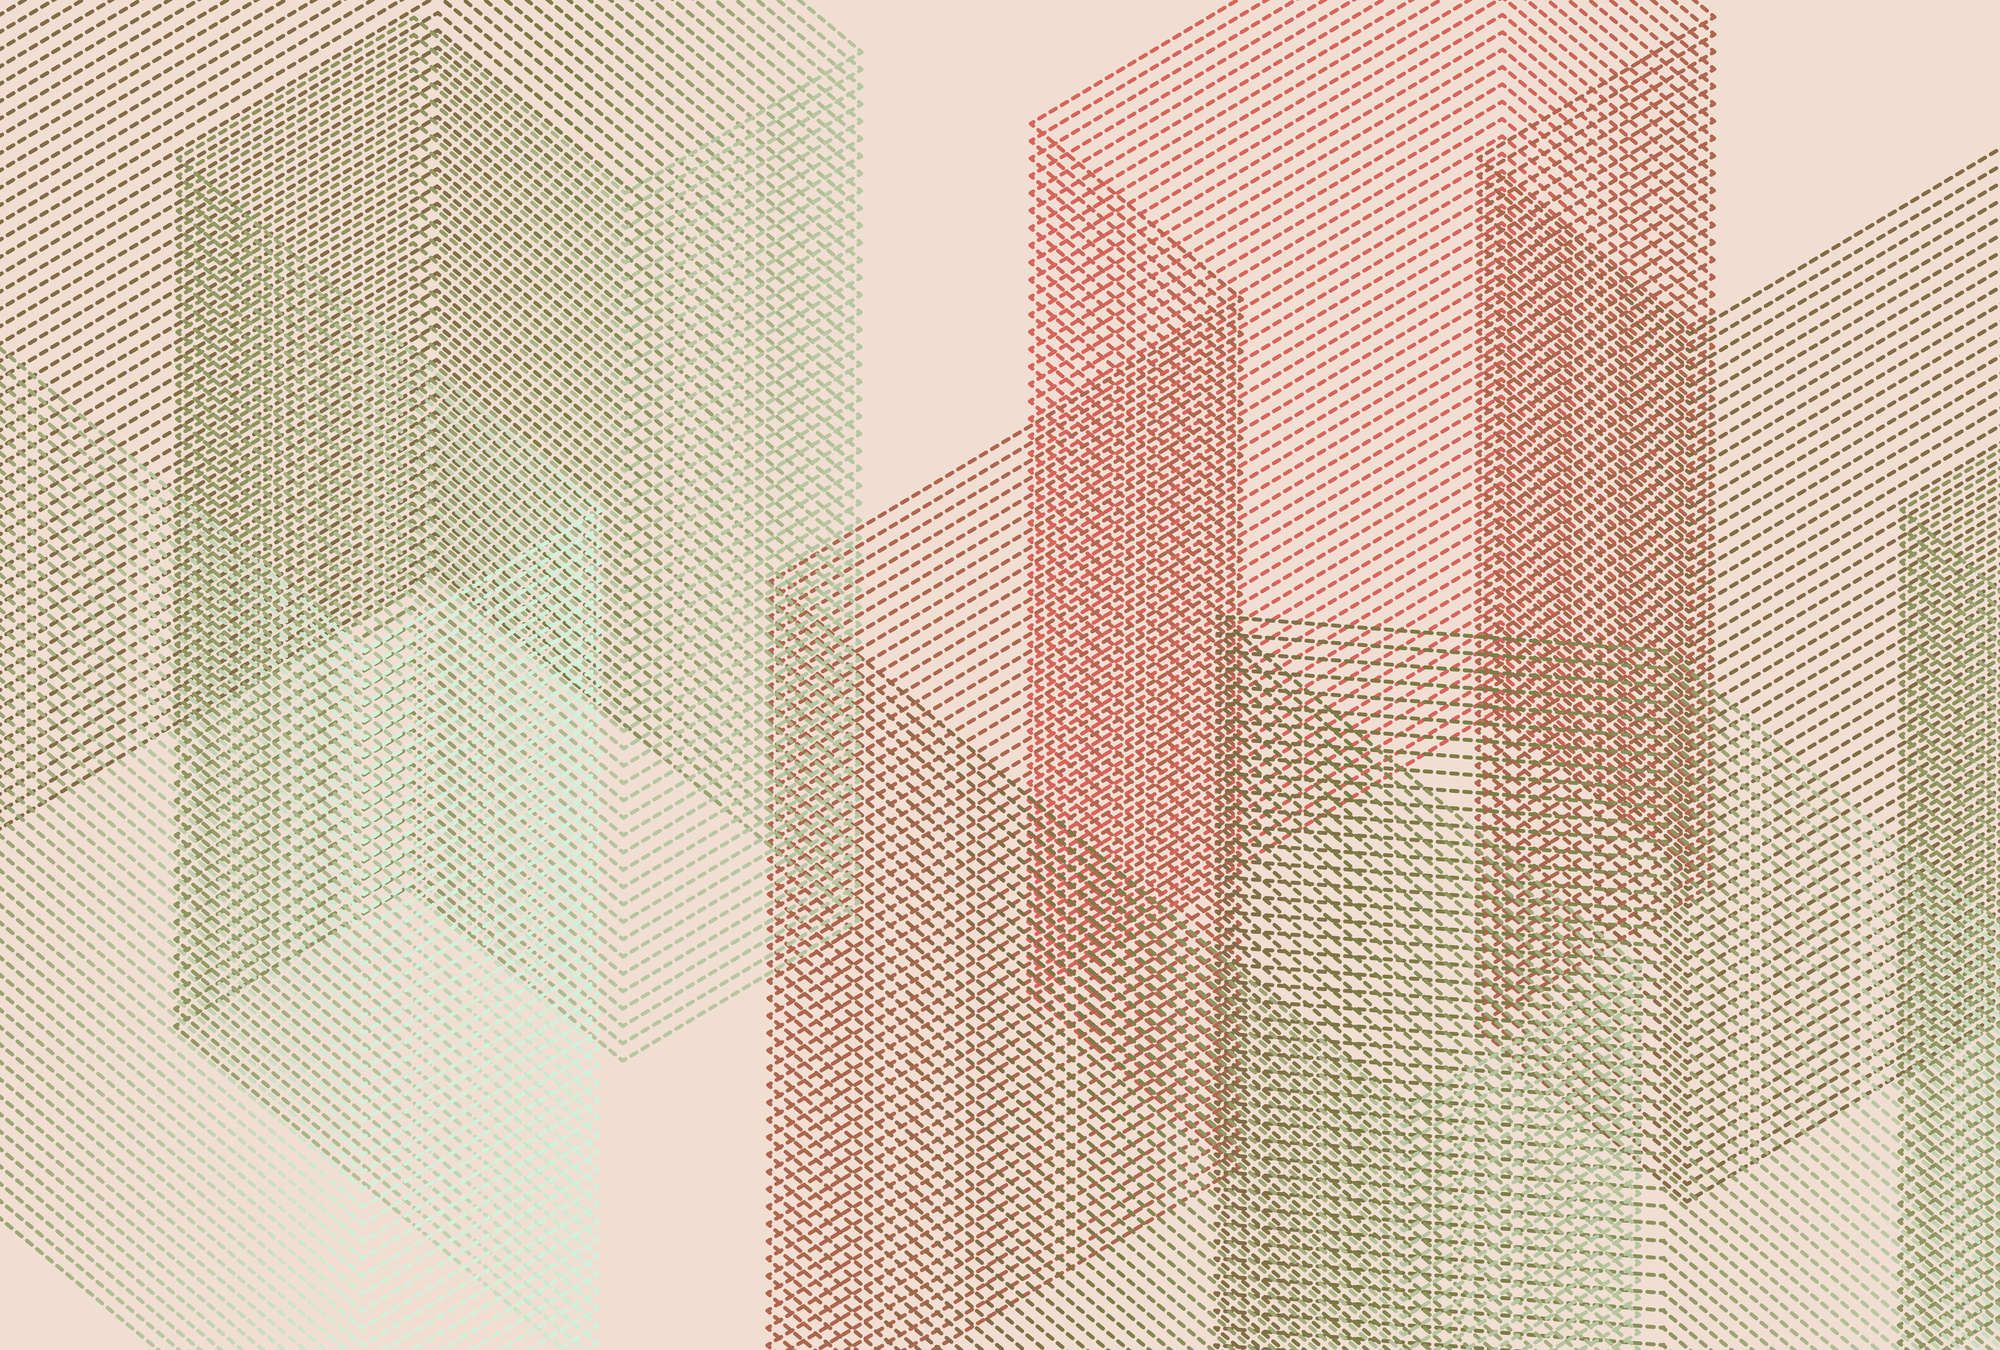             Photo wallpaper »mesh 2« - Abstract 3D design - Red, Green | Light textured non-woven
        